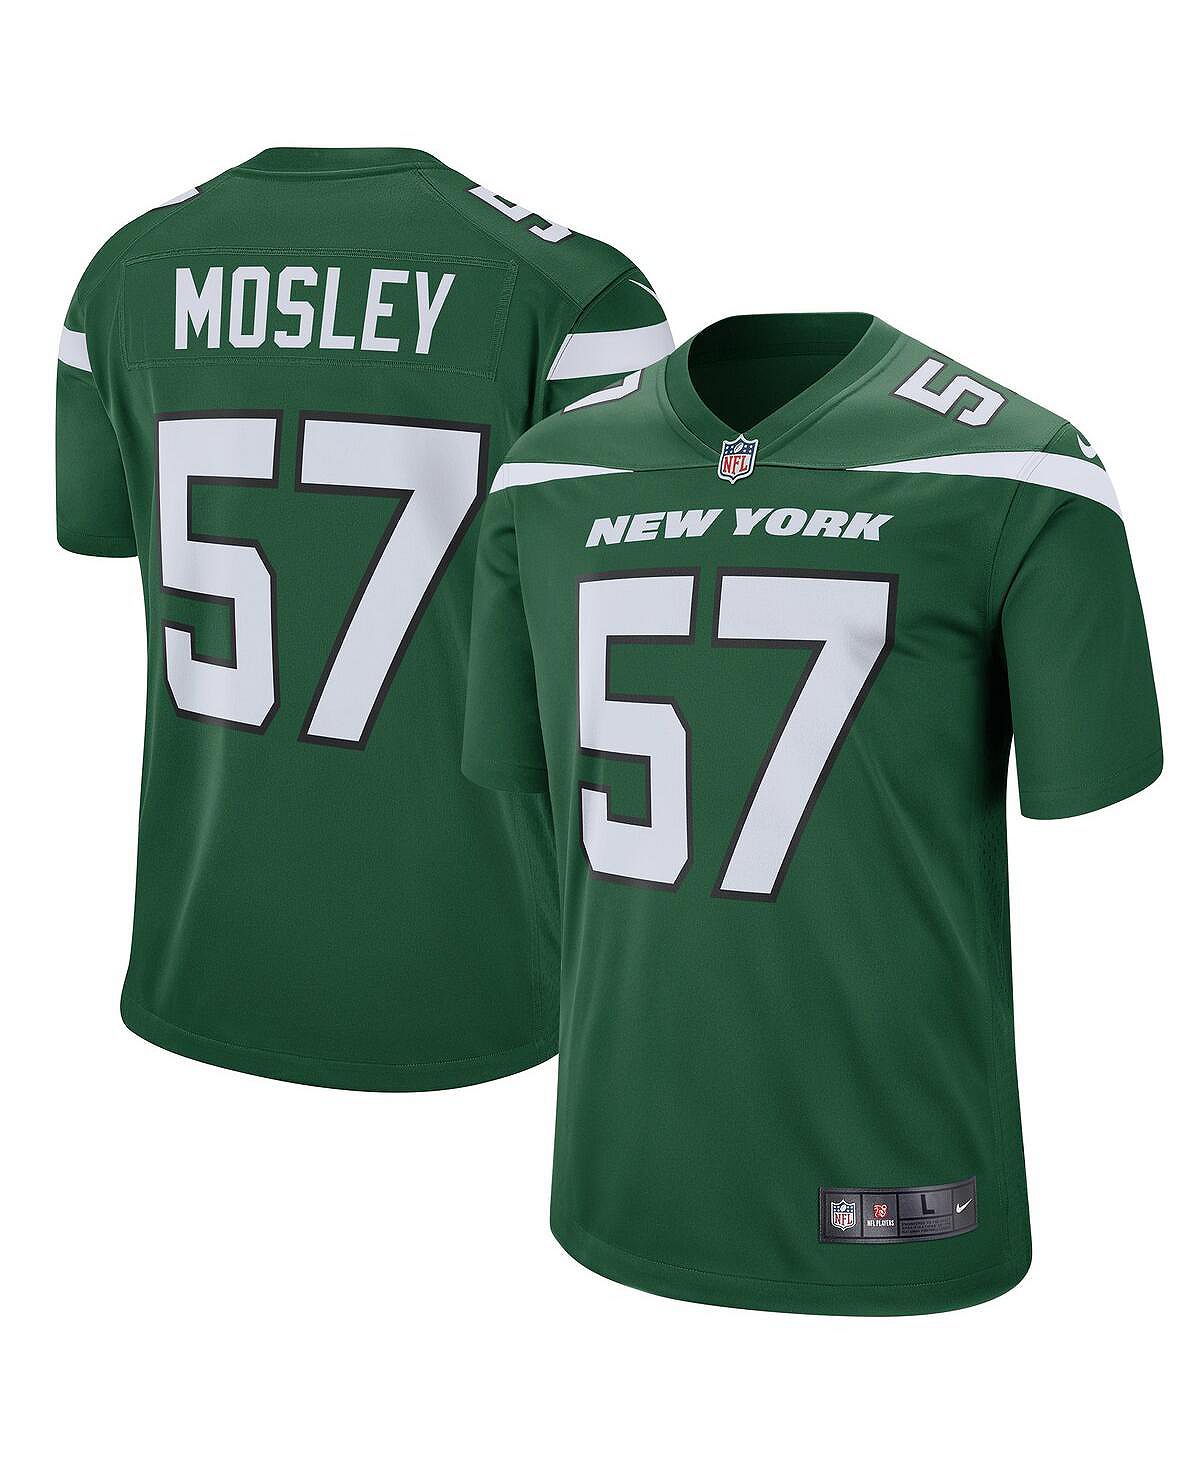 Мужская футболка cj mosley gotham green new york jets game jersey Nike, зеленый фото